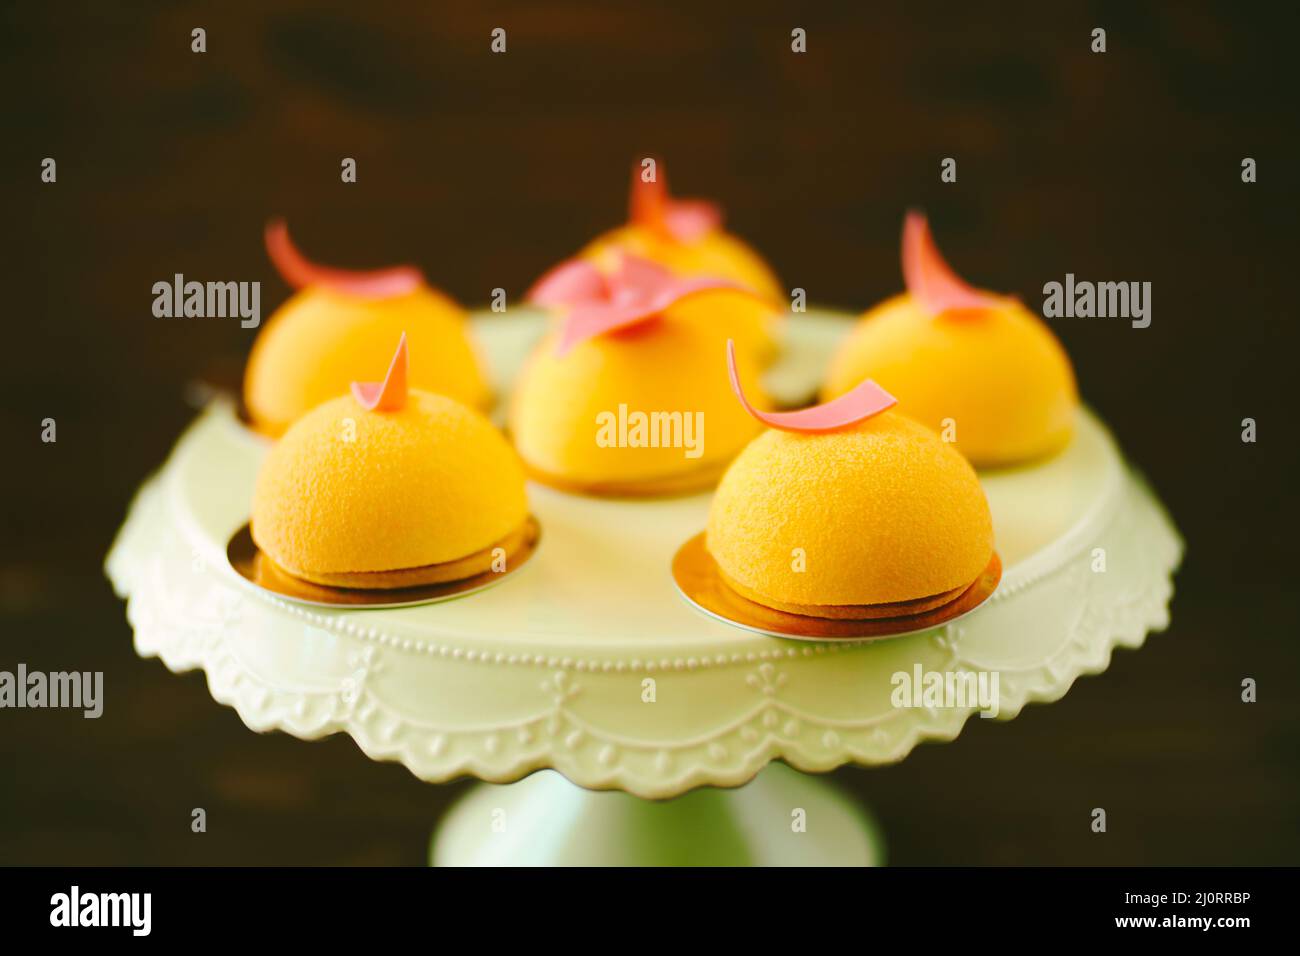 Seis tortas de mousse amarillas individuales decoradas con flores vidriadas sobre una mesa giratoria Foto de stock